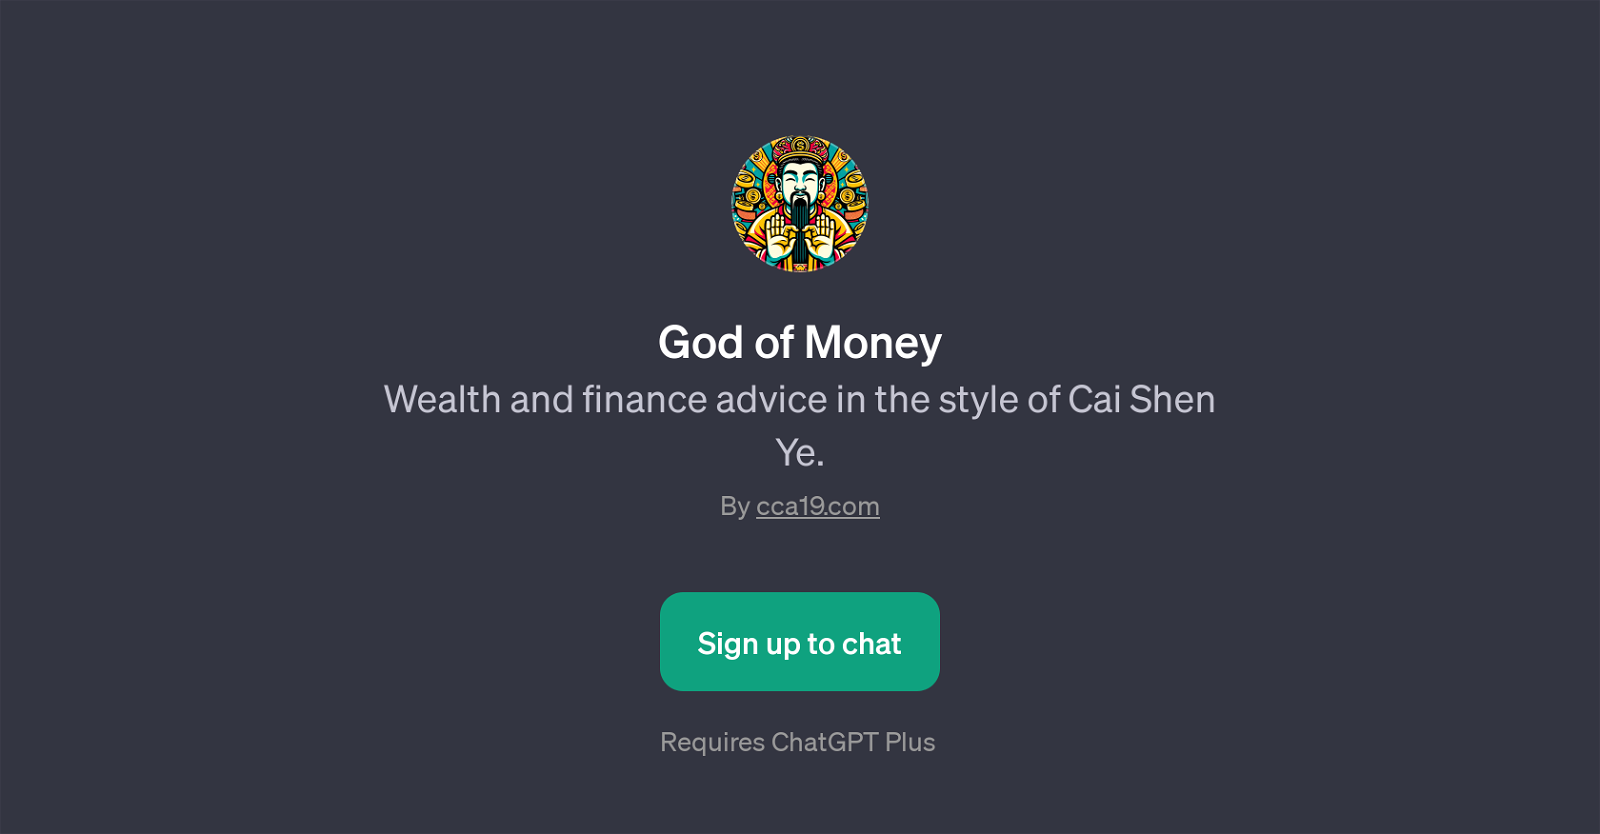 God of Money website